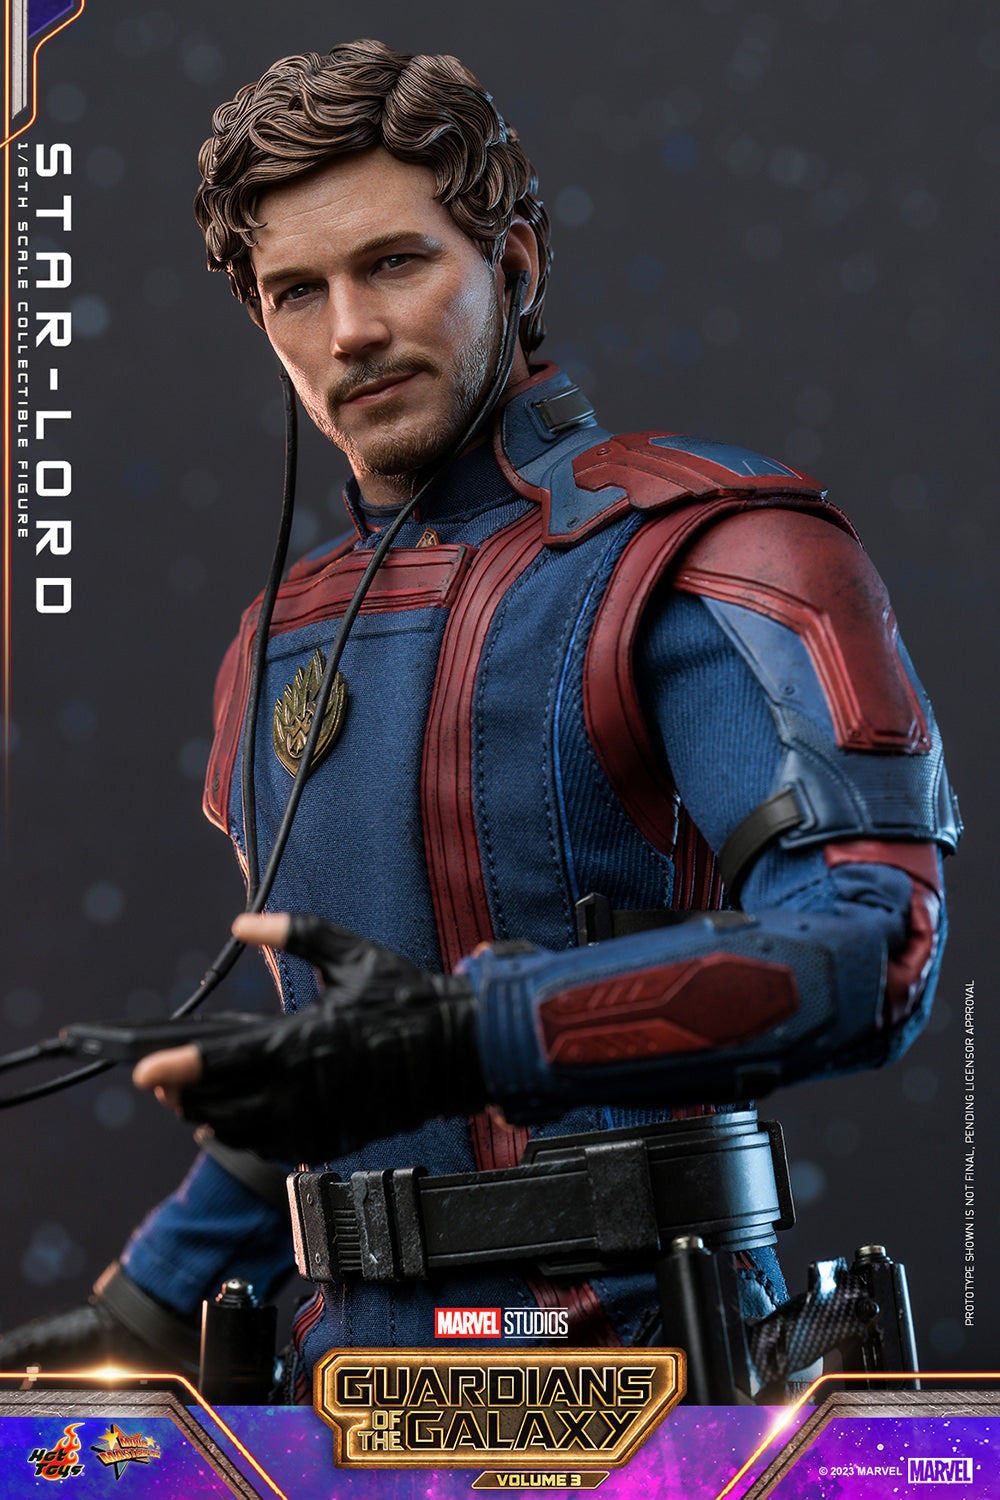 Marvel Men's Deluxe Star Lord Costume